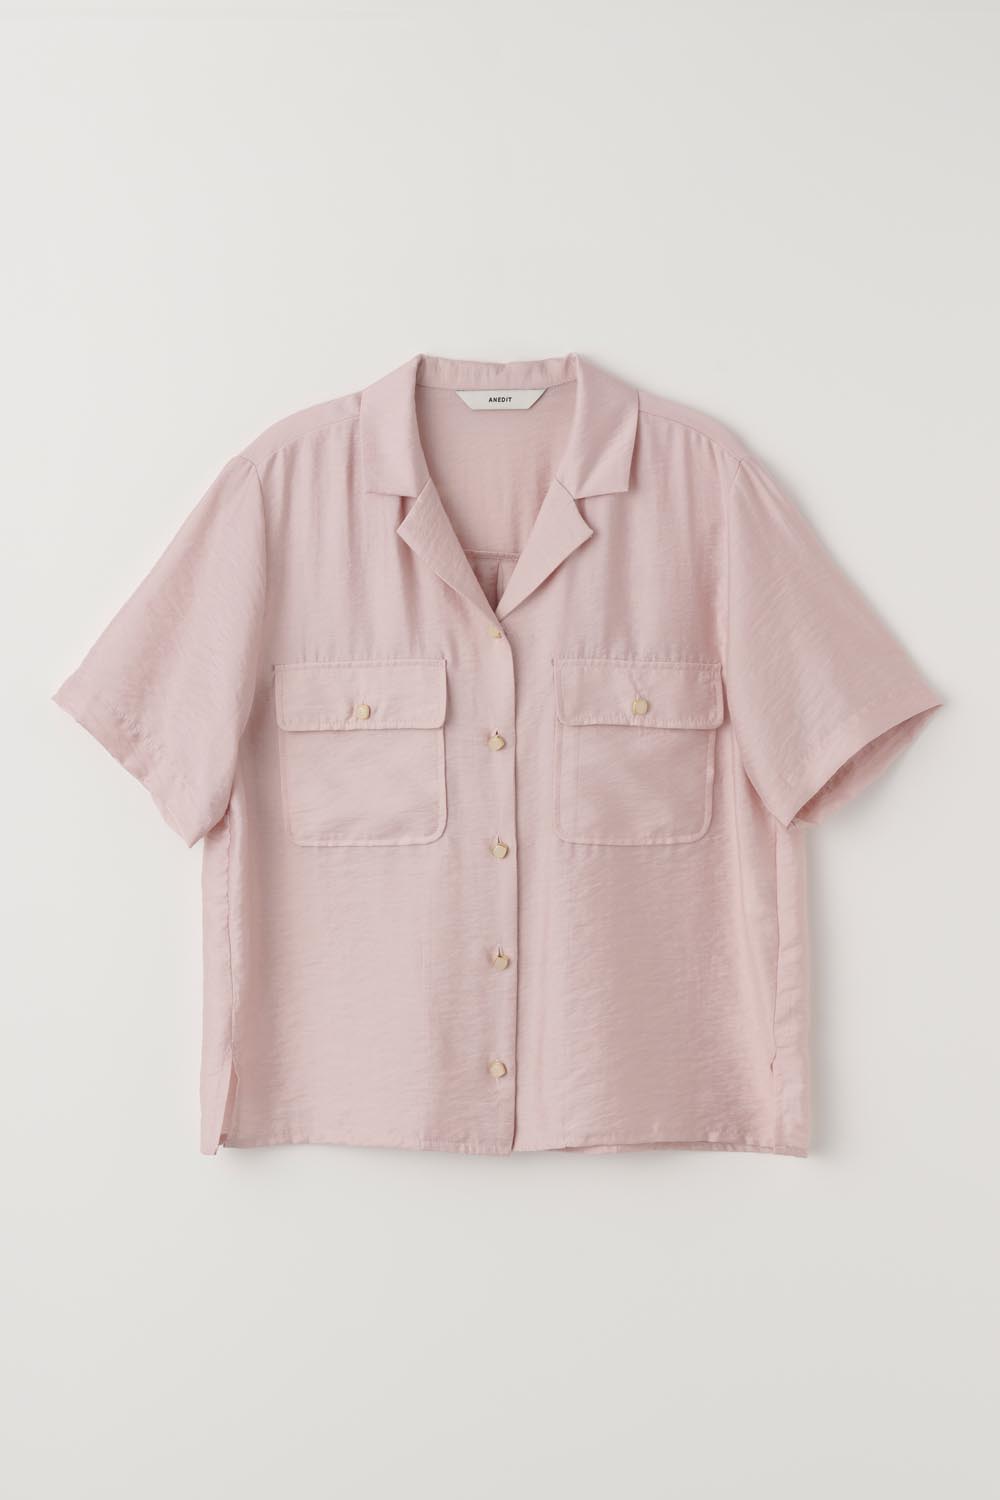 H Jewel Open Collar Shirt_Pale Pink